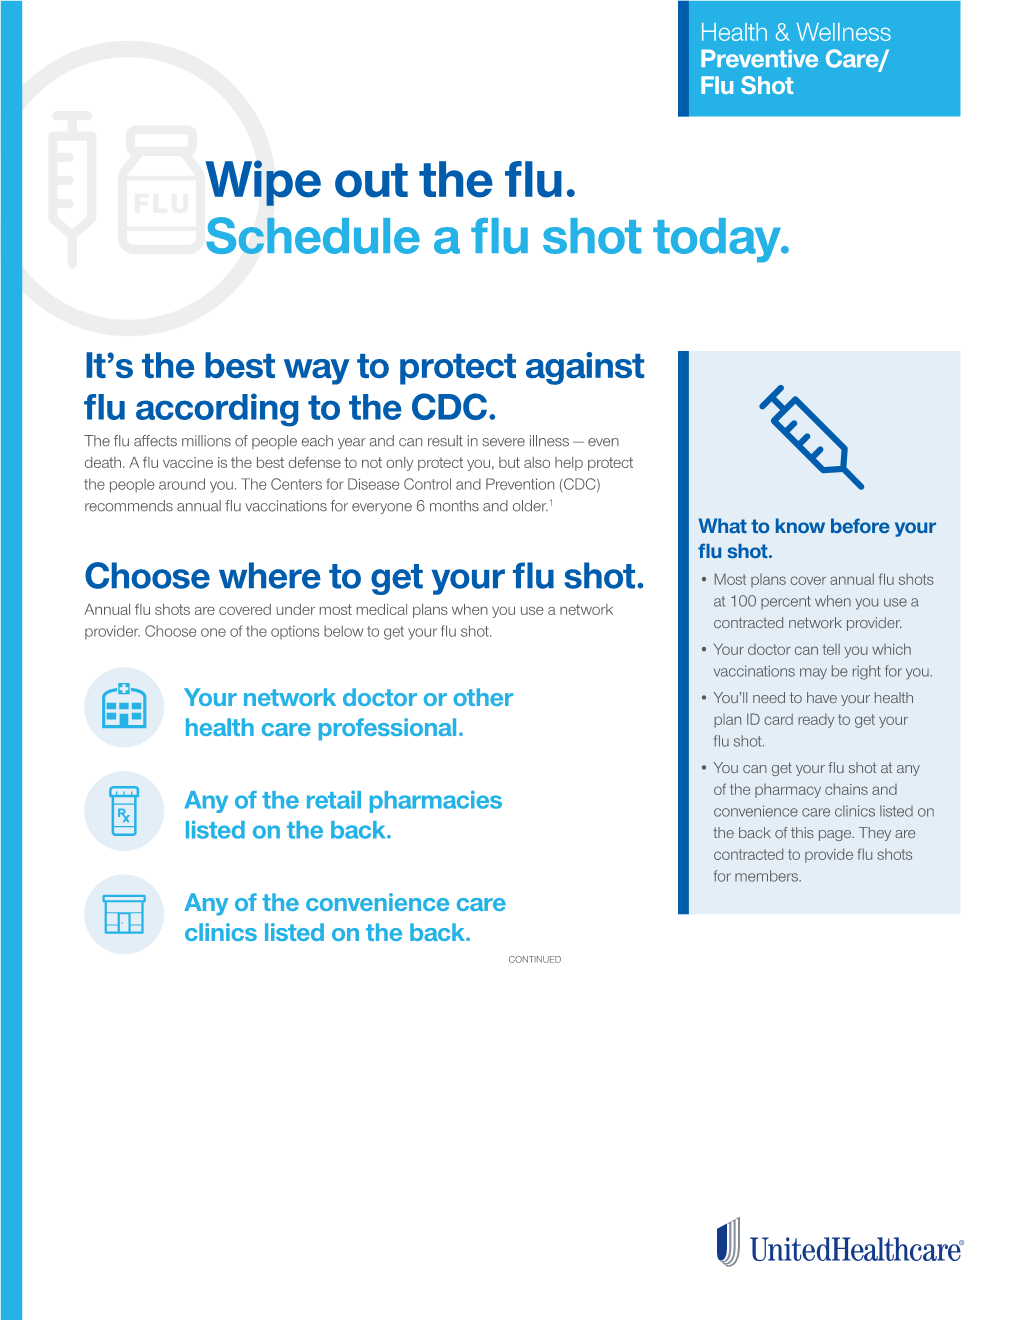 Wipe out the Flu. Schedule a Flu Shot Today